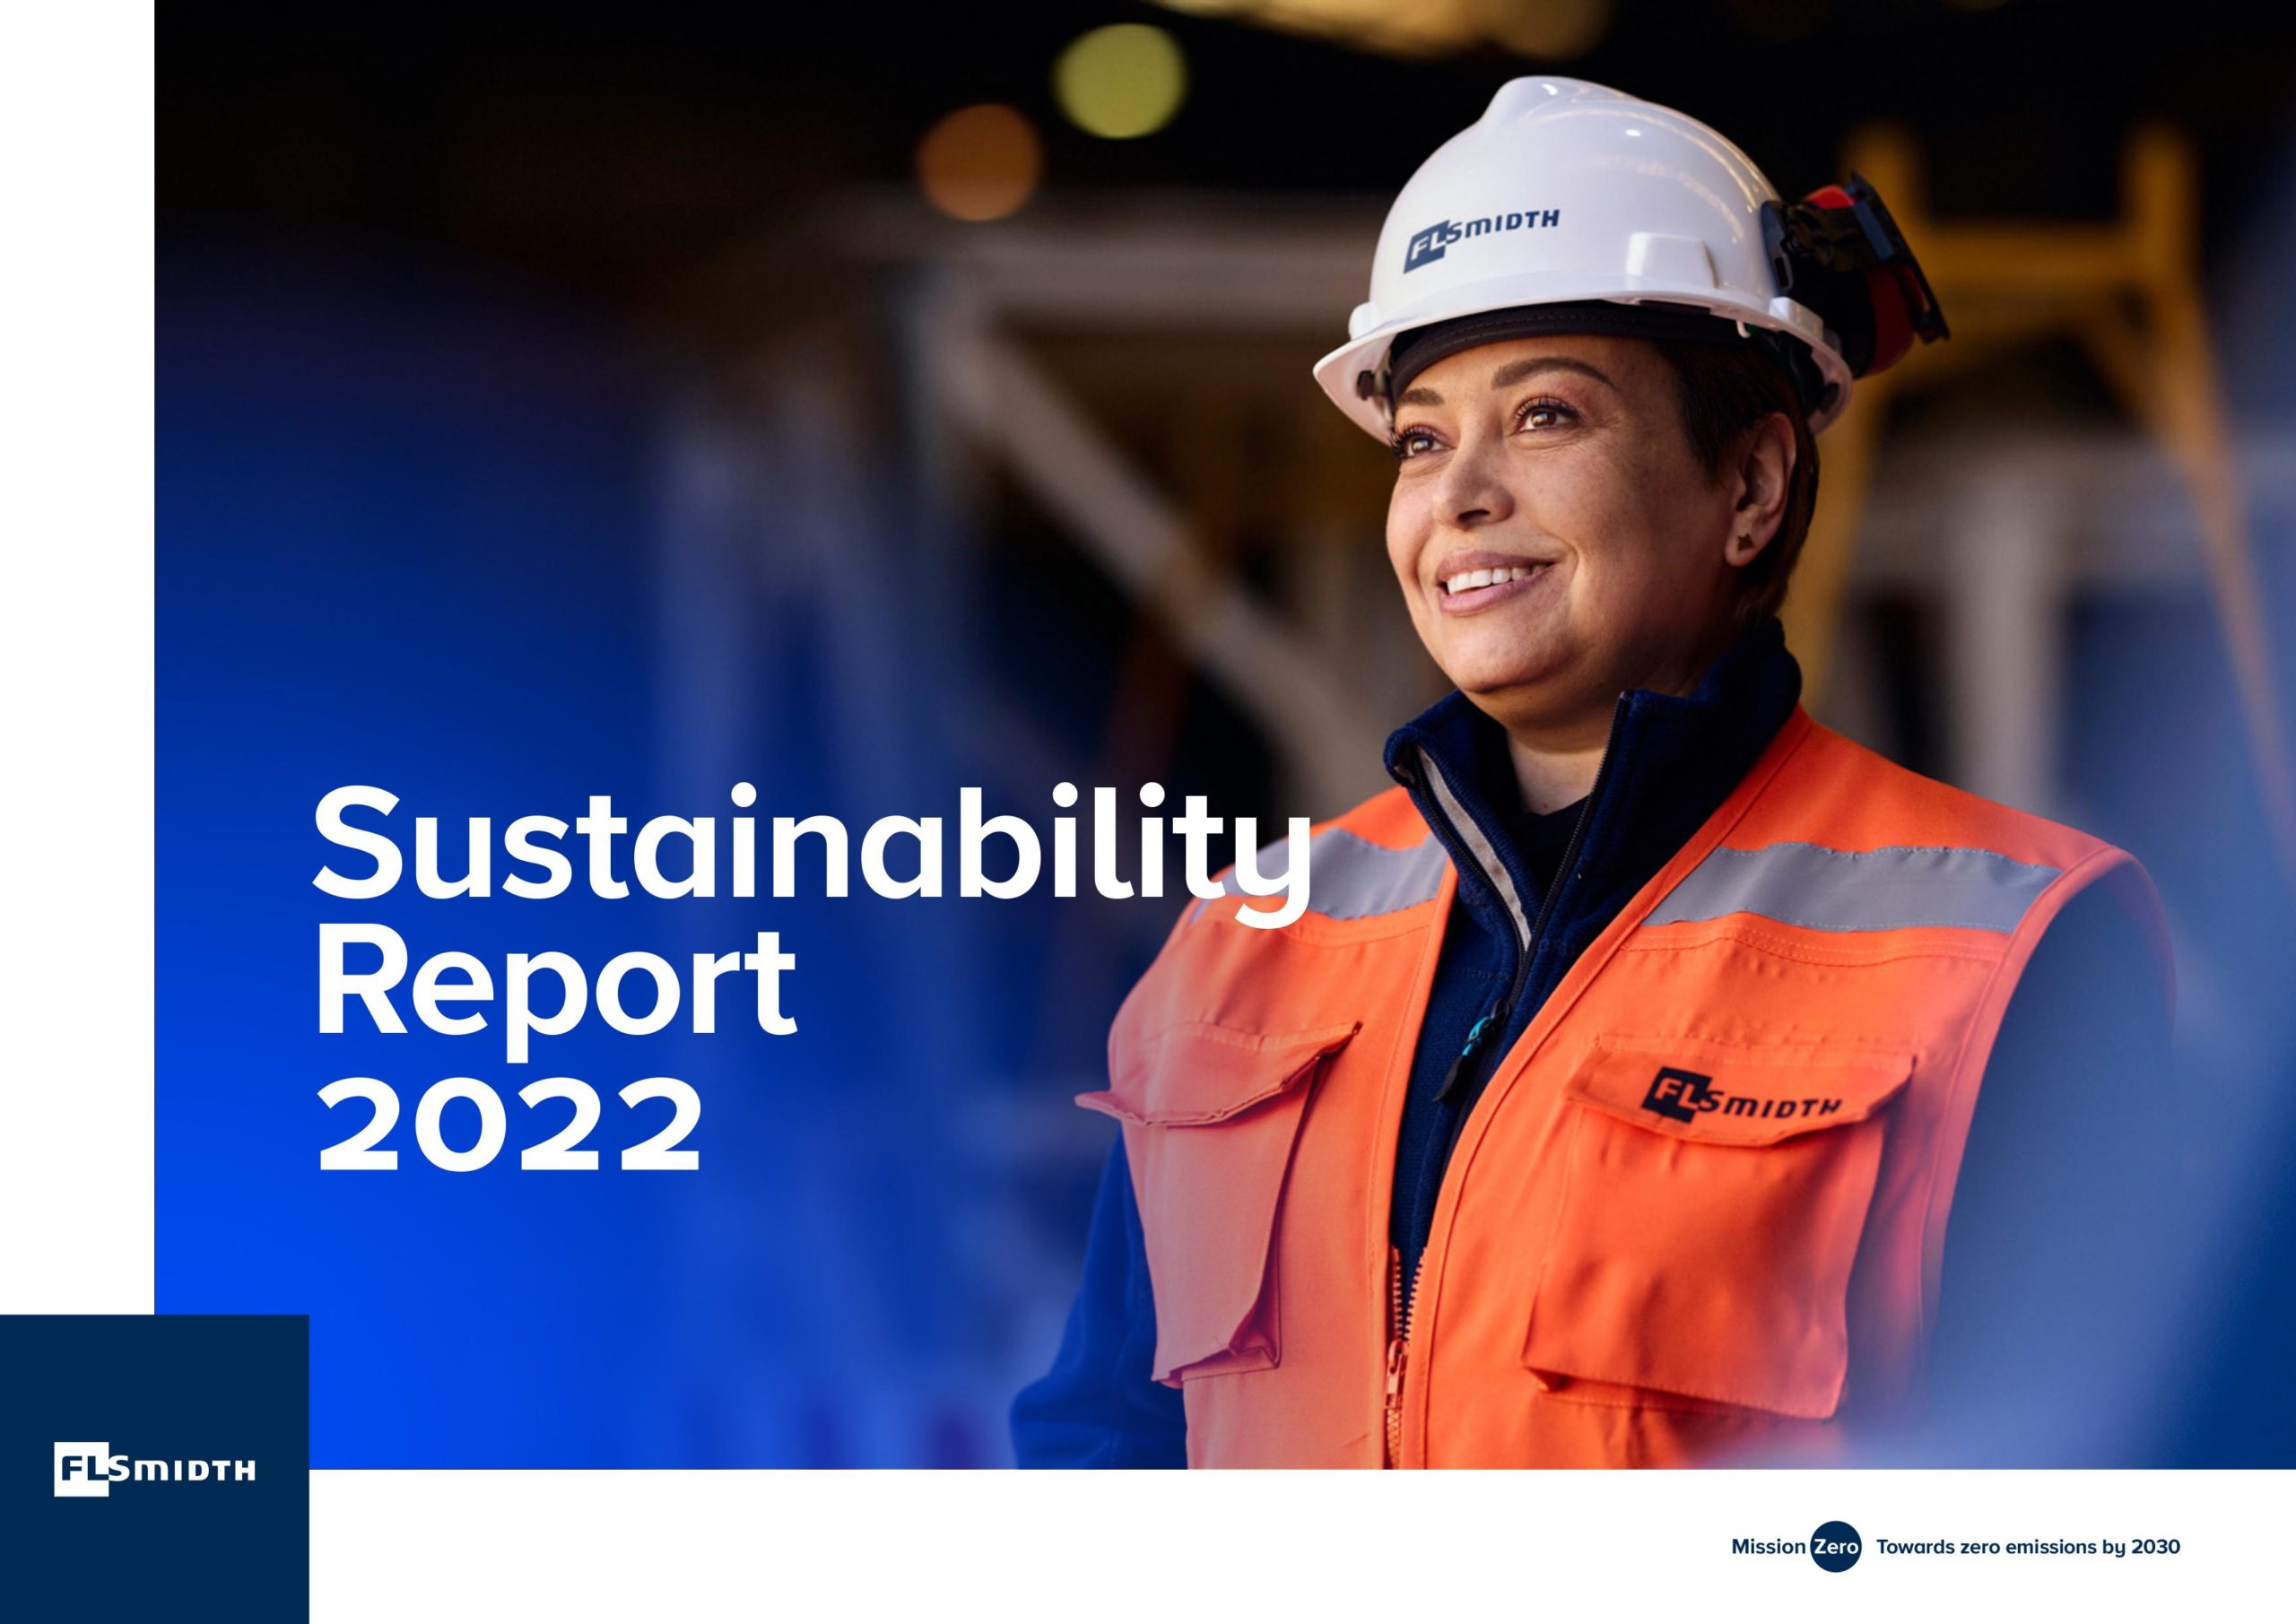 FLSmidth Sustainability Report 2022